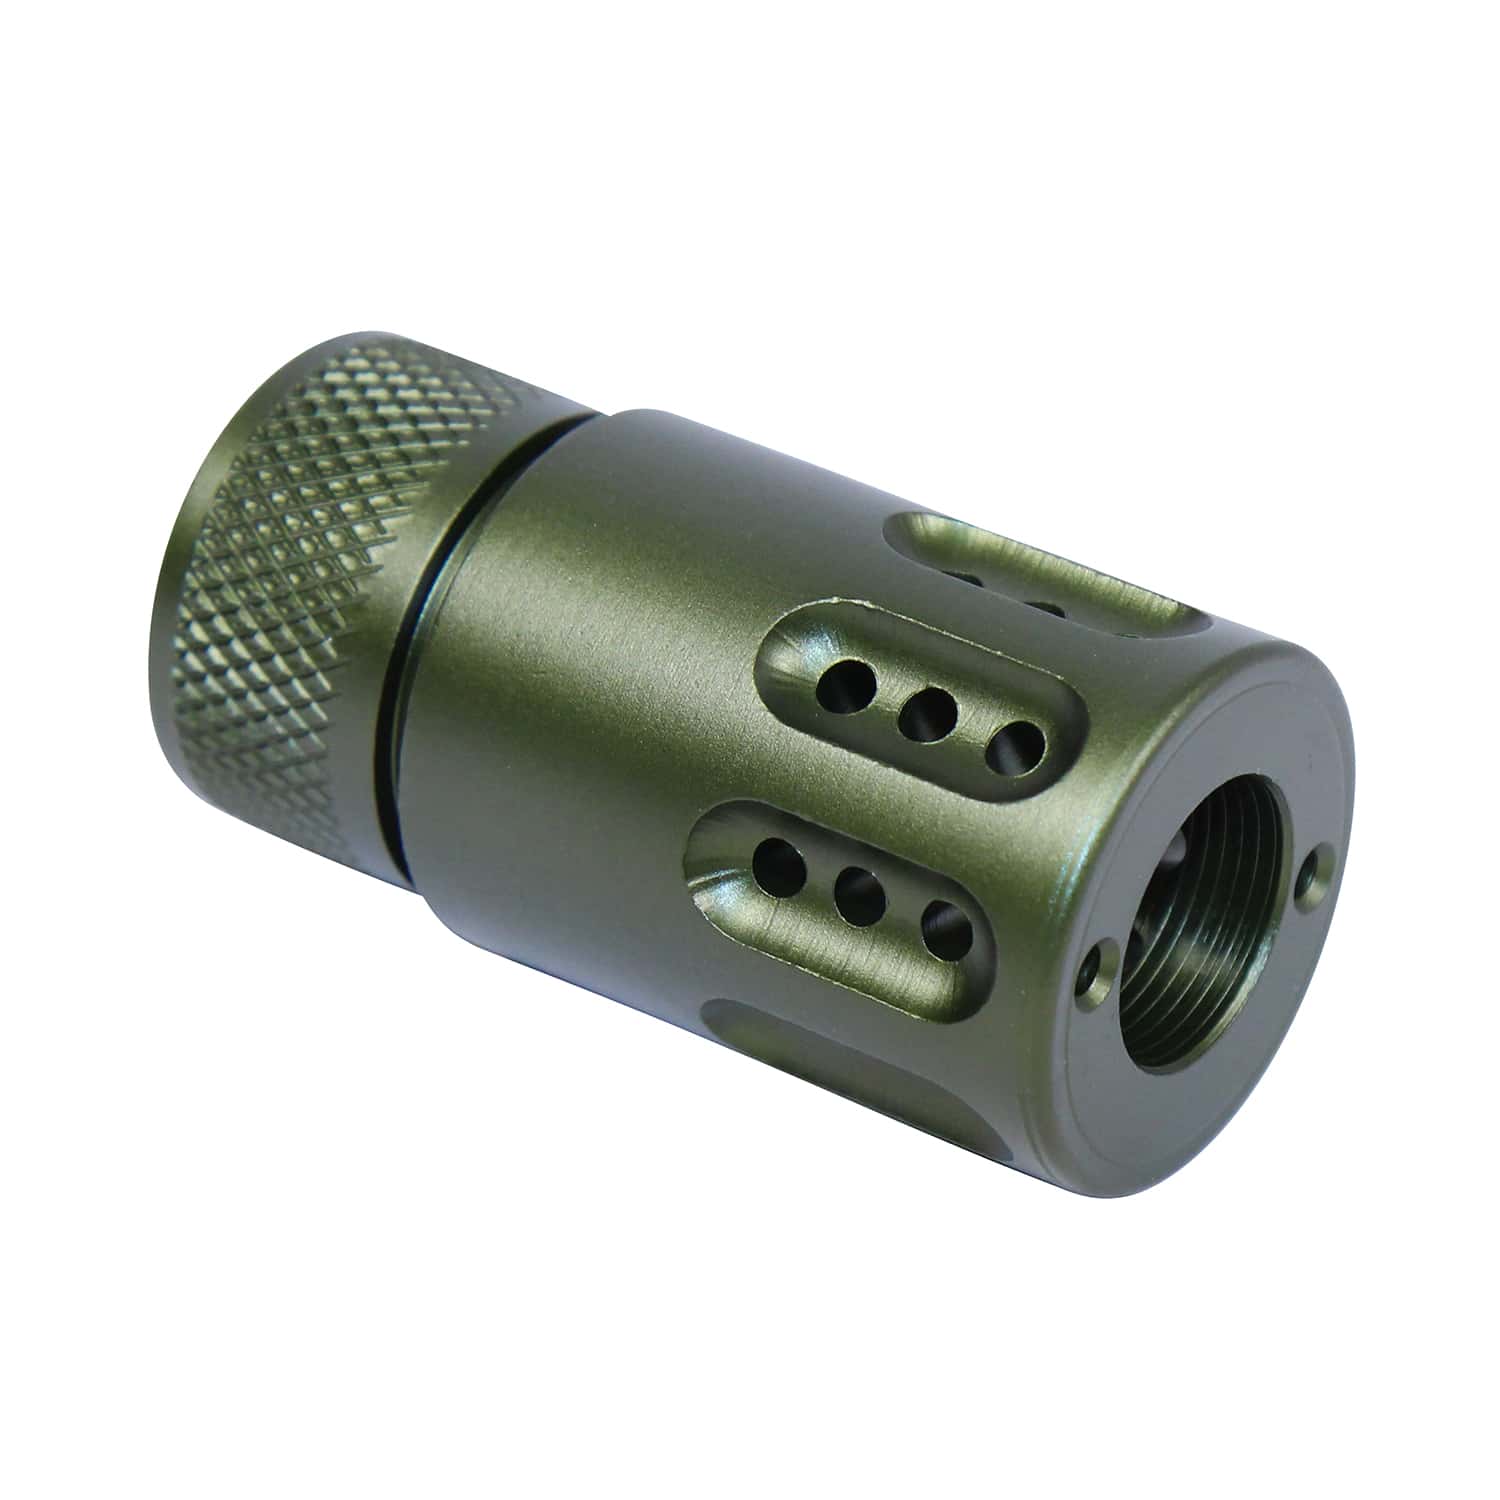 AR .308 caliber mini muzzle brake with barrel shroud in anodized green